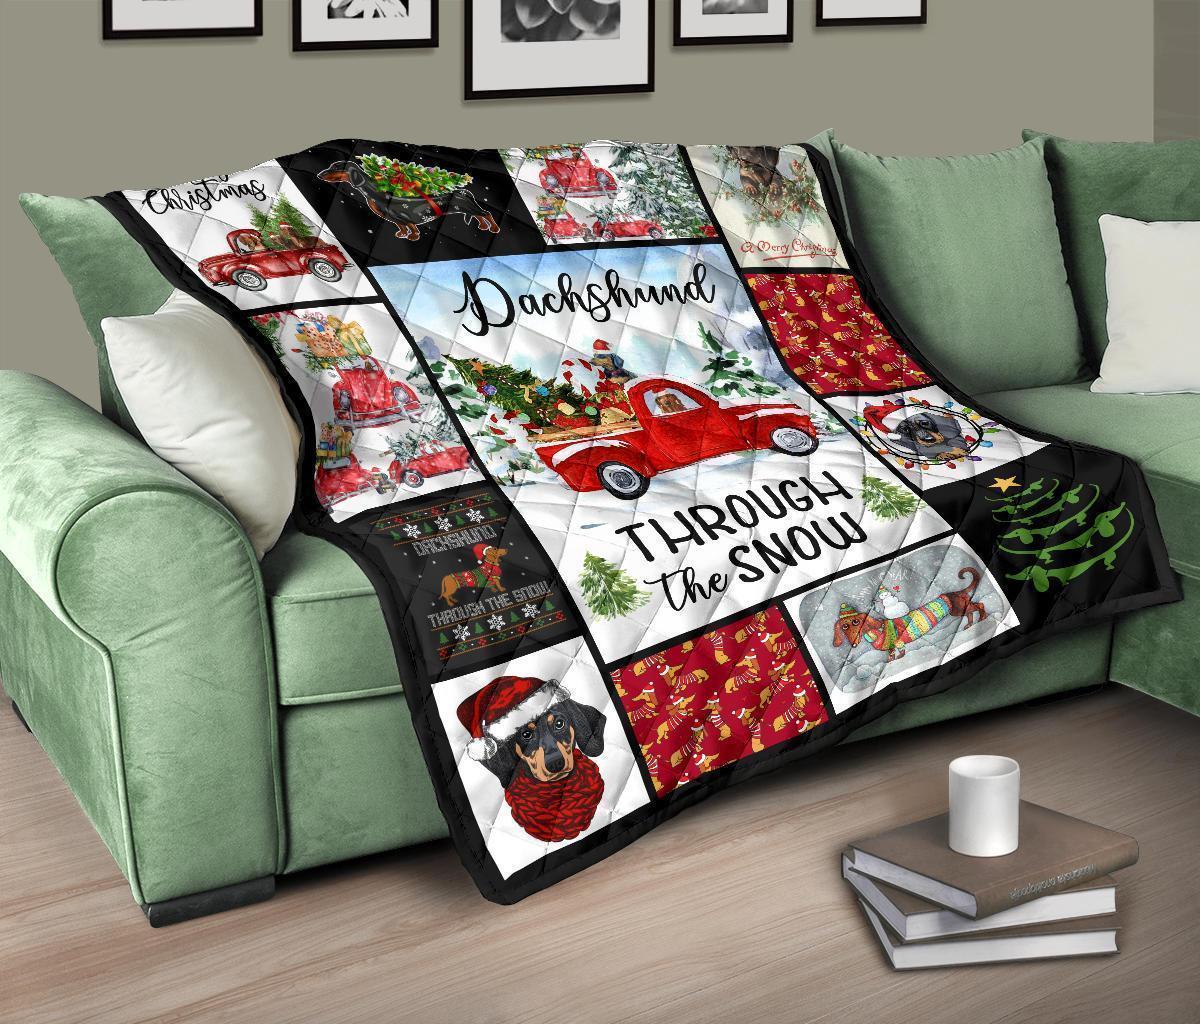 Christmas Dachshund Quilt Blanket Through The Snow Xmas11-Gear Wanta